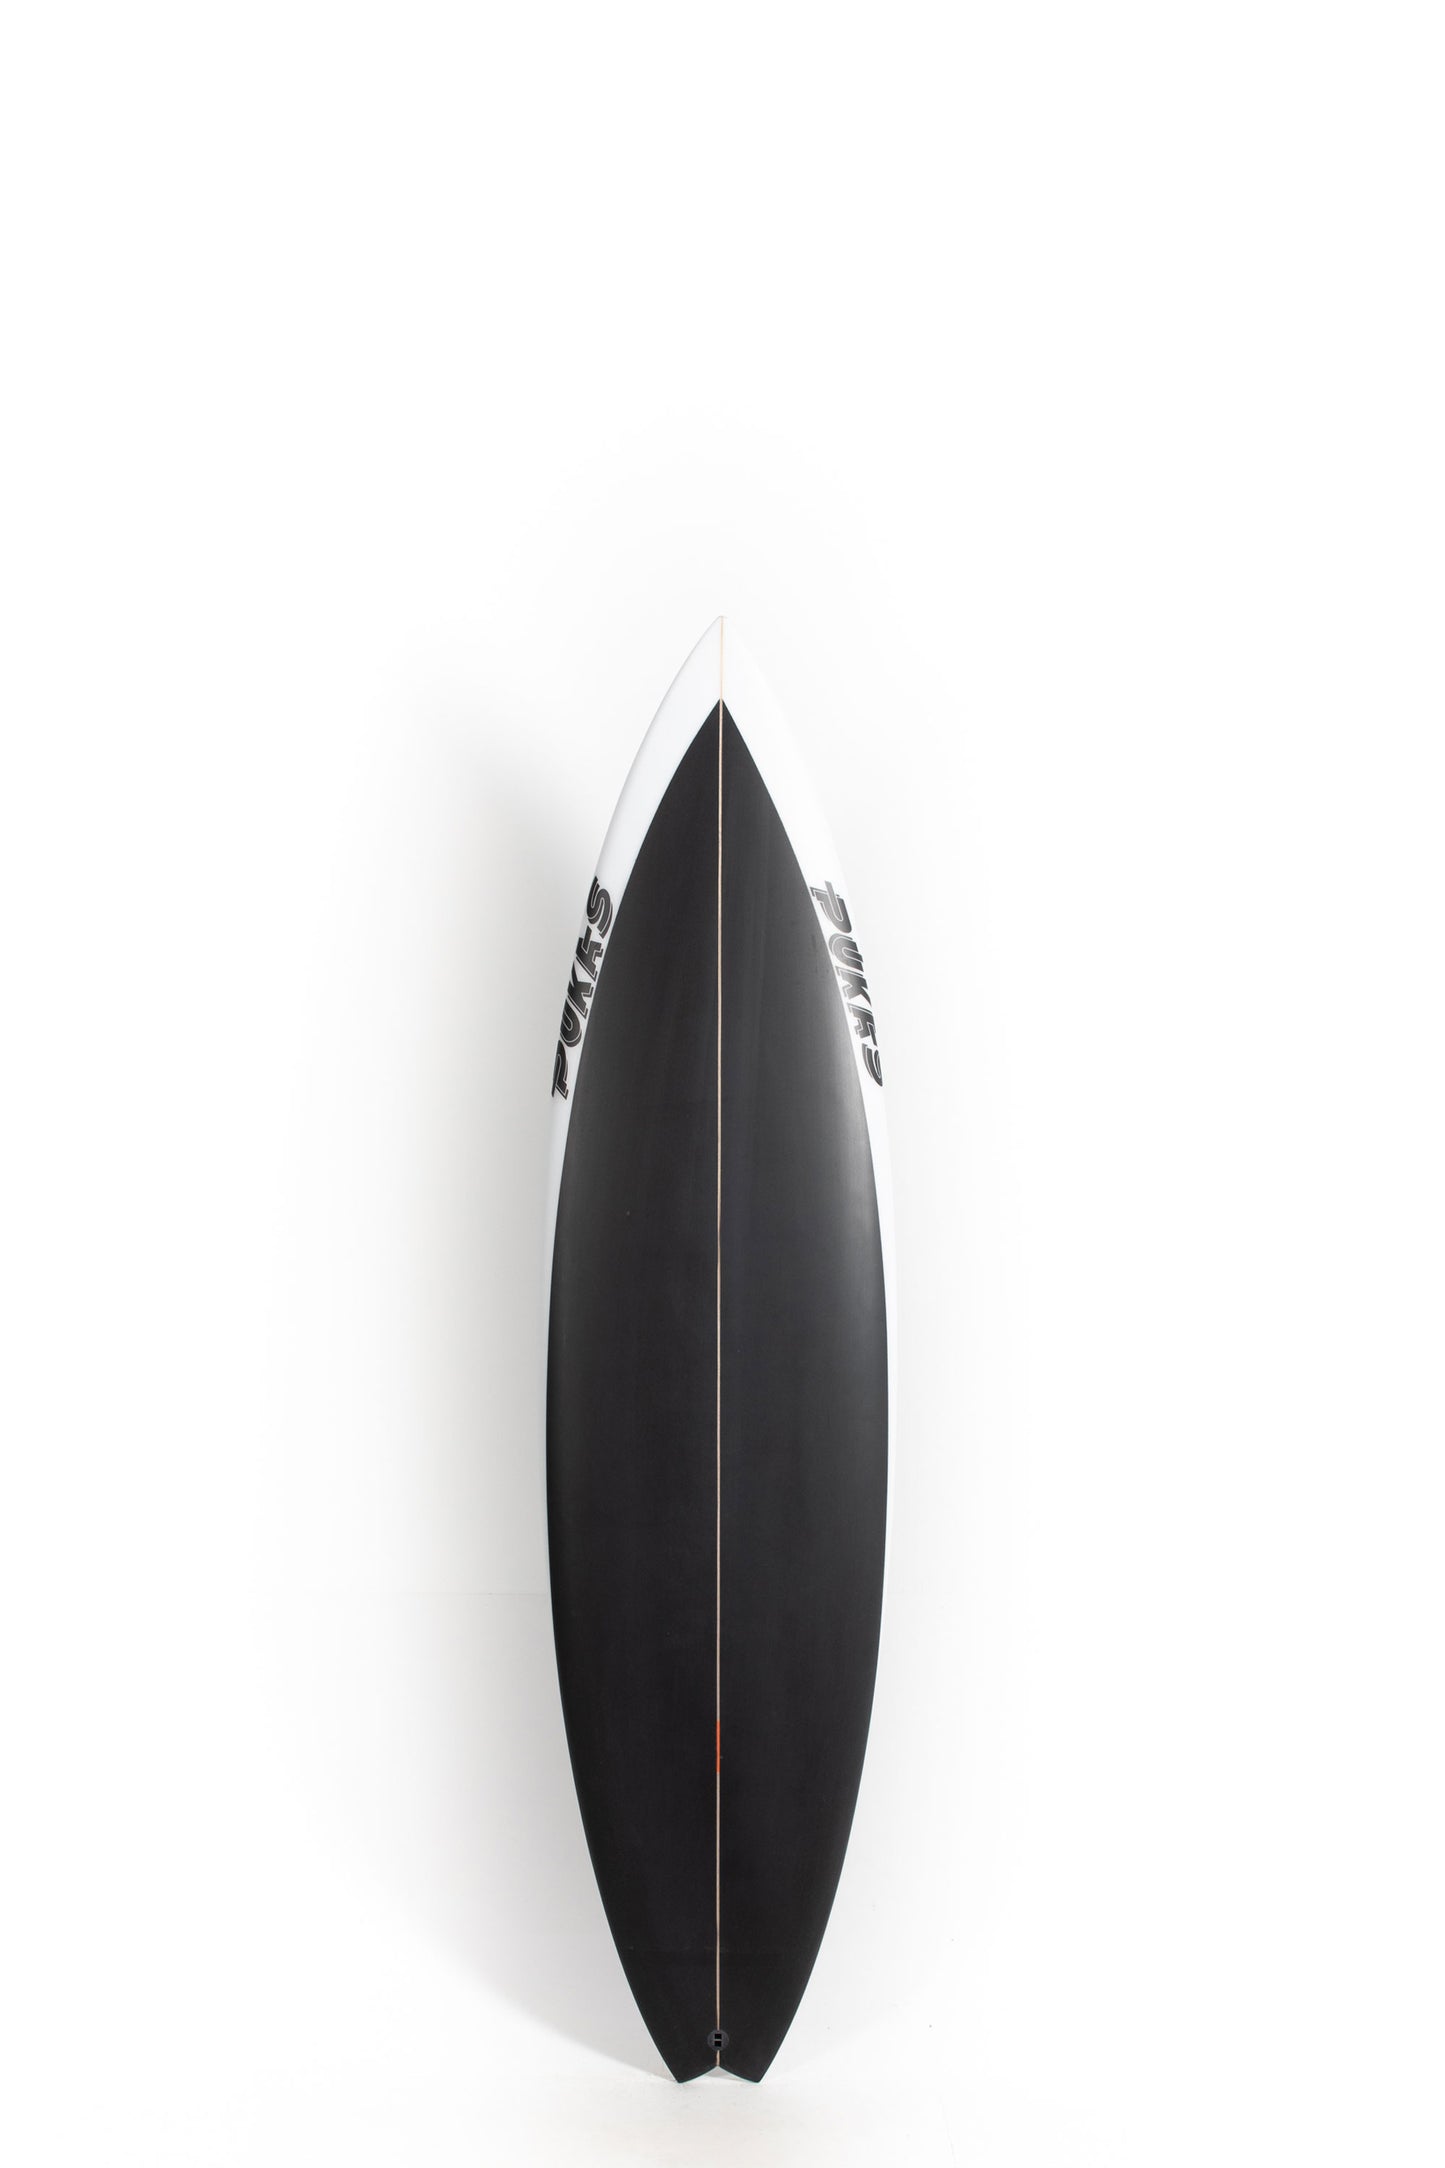 Pukas Surf Shop - Pukas Surfboard - WATER LION ULTRA by Chris Christenson - 6’4” x 18,88 x 2,5 - 31,8L - PC00818